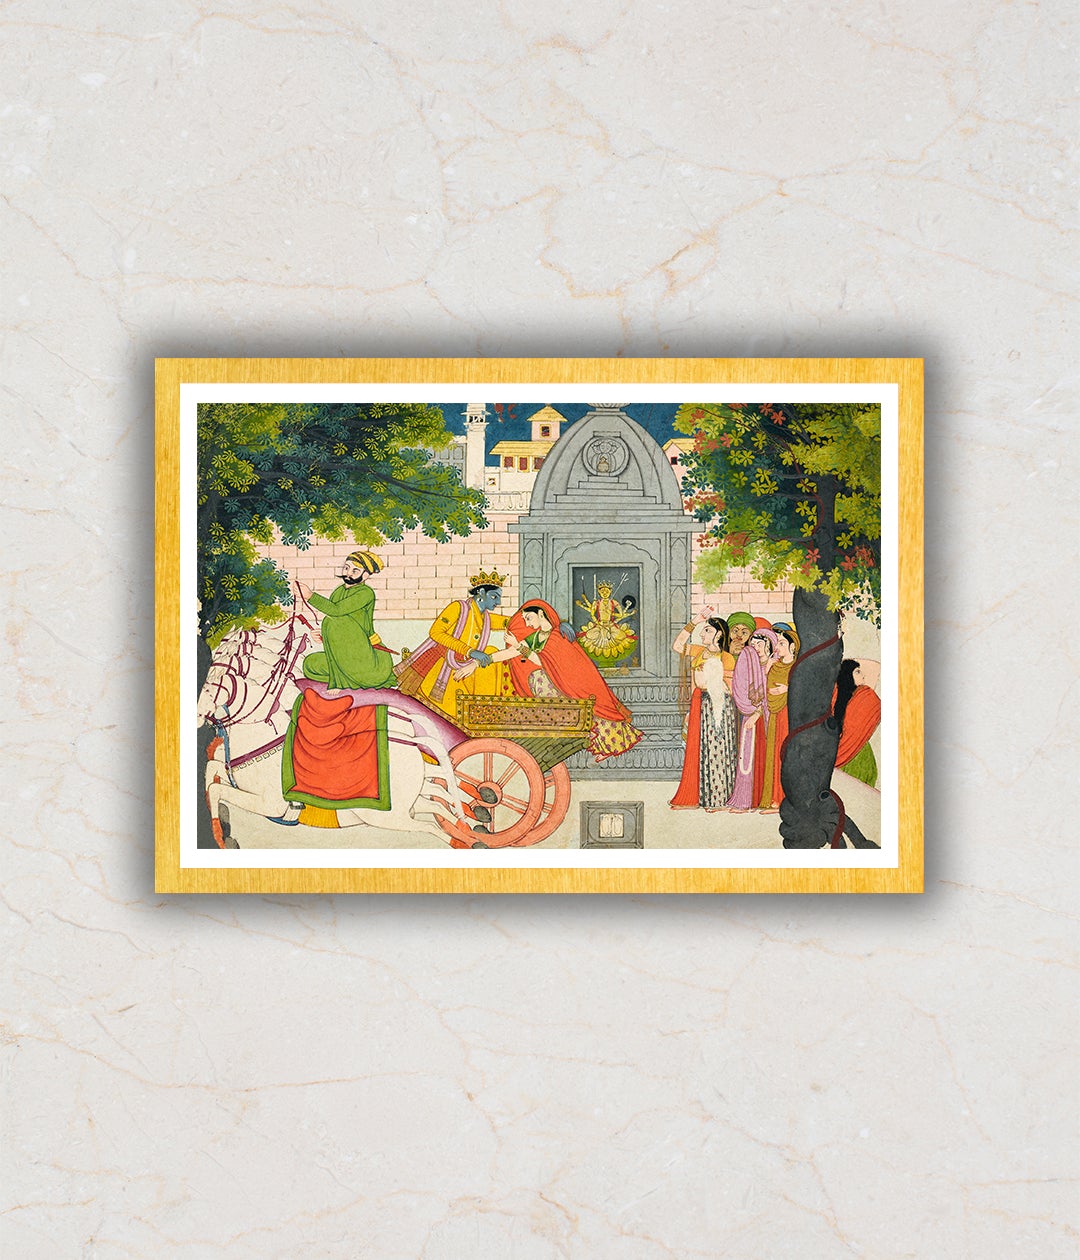 Rukmini Elopes With Krishna, Folio From a Bhagavata Purana Artwork Painting For Home Wall Art DŽcor